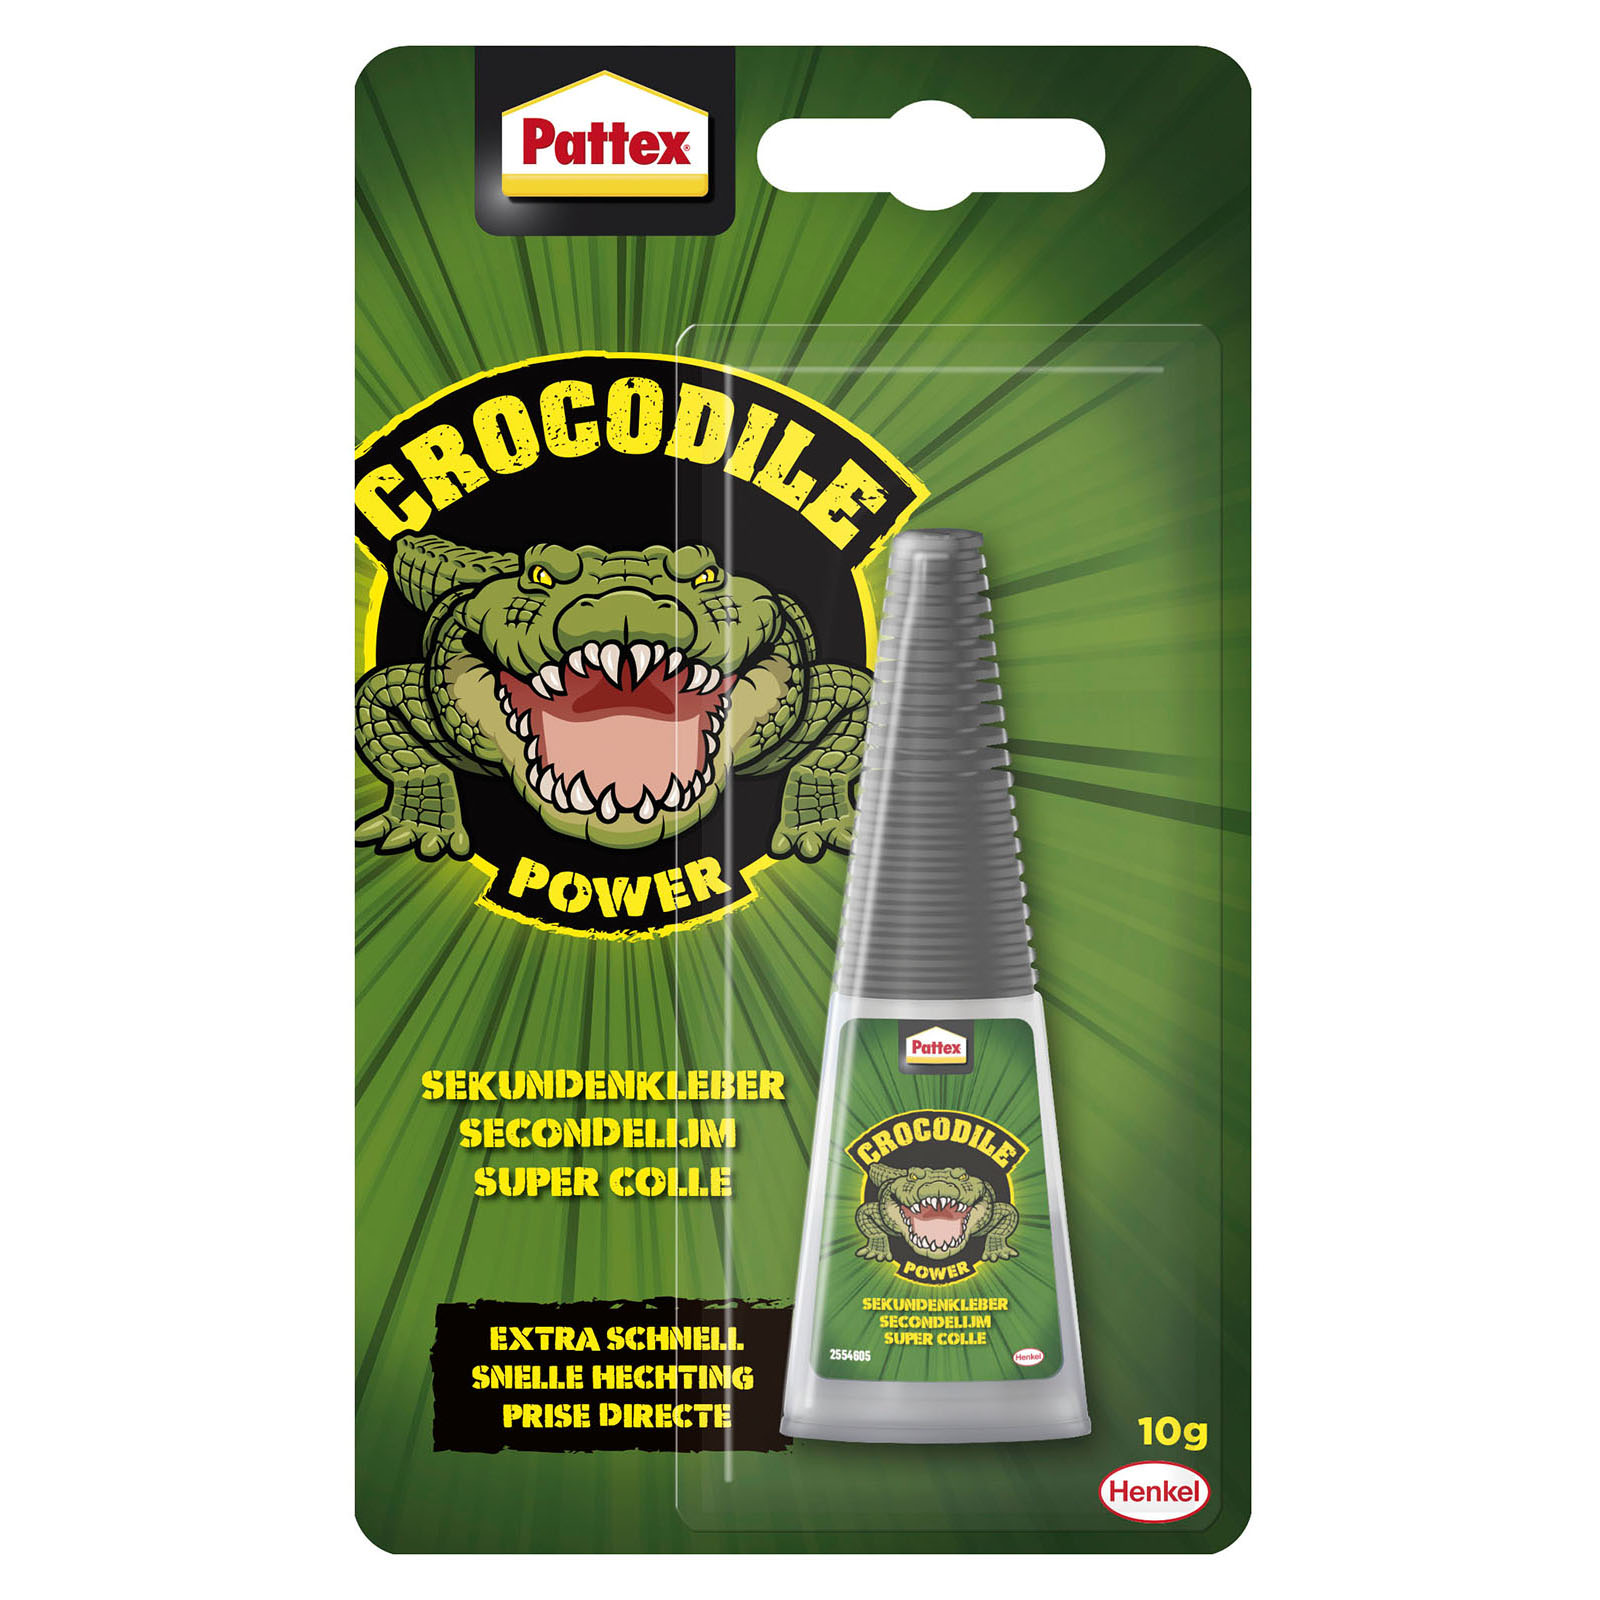 PATTEX Crocodile Power Sekundenkleber, Transparent